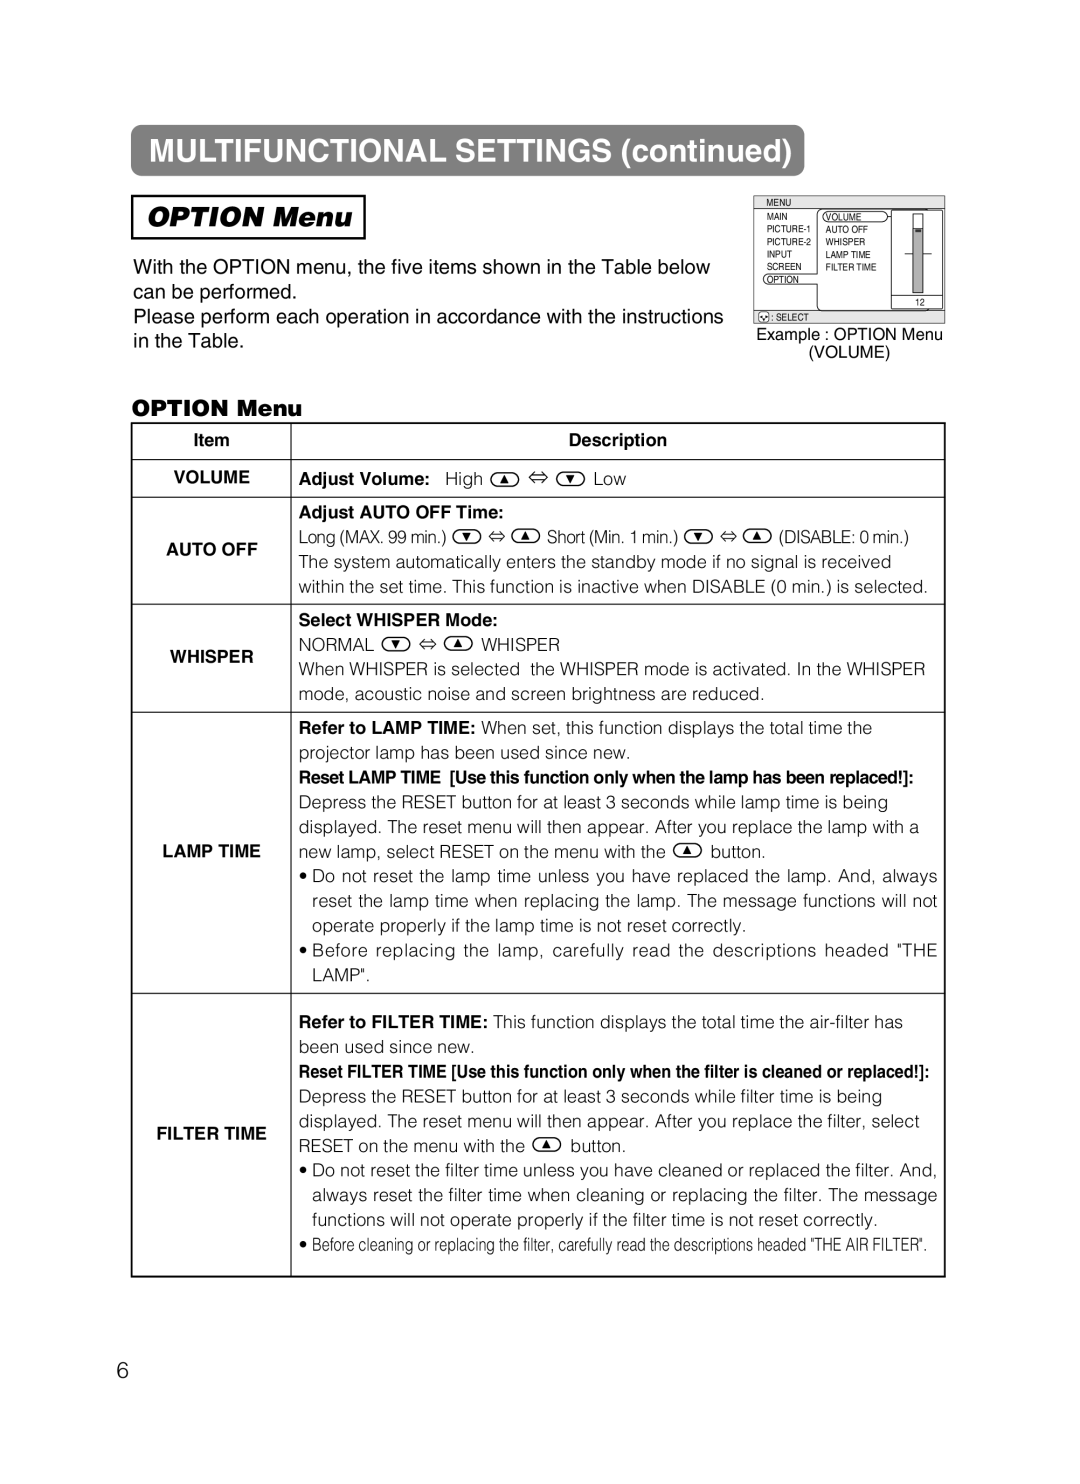 Dukane 28A8049B user manual OPTION Menu, MULTIFUNCTIONAL SETTINGS continued 